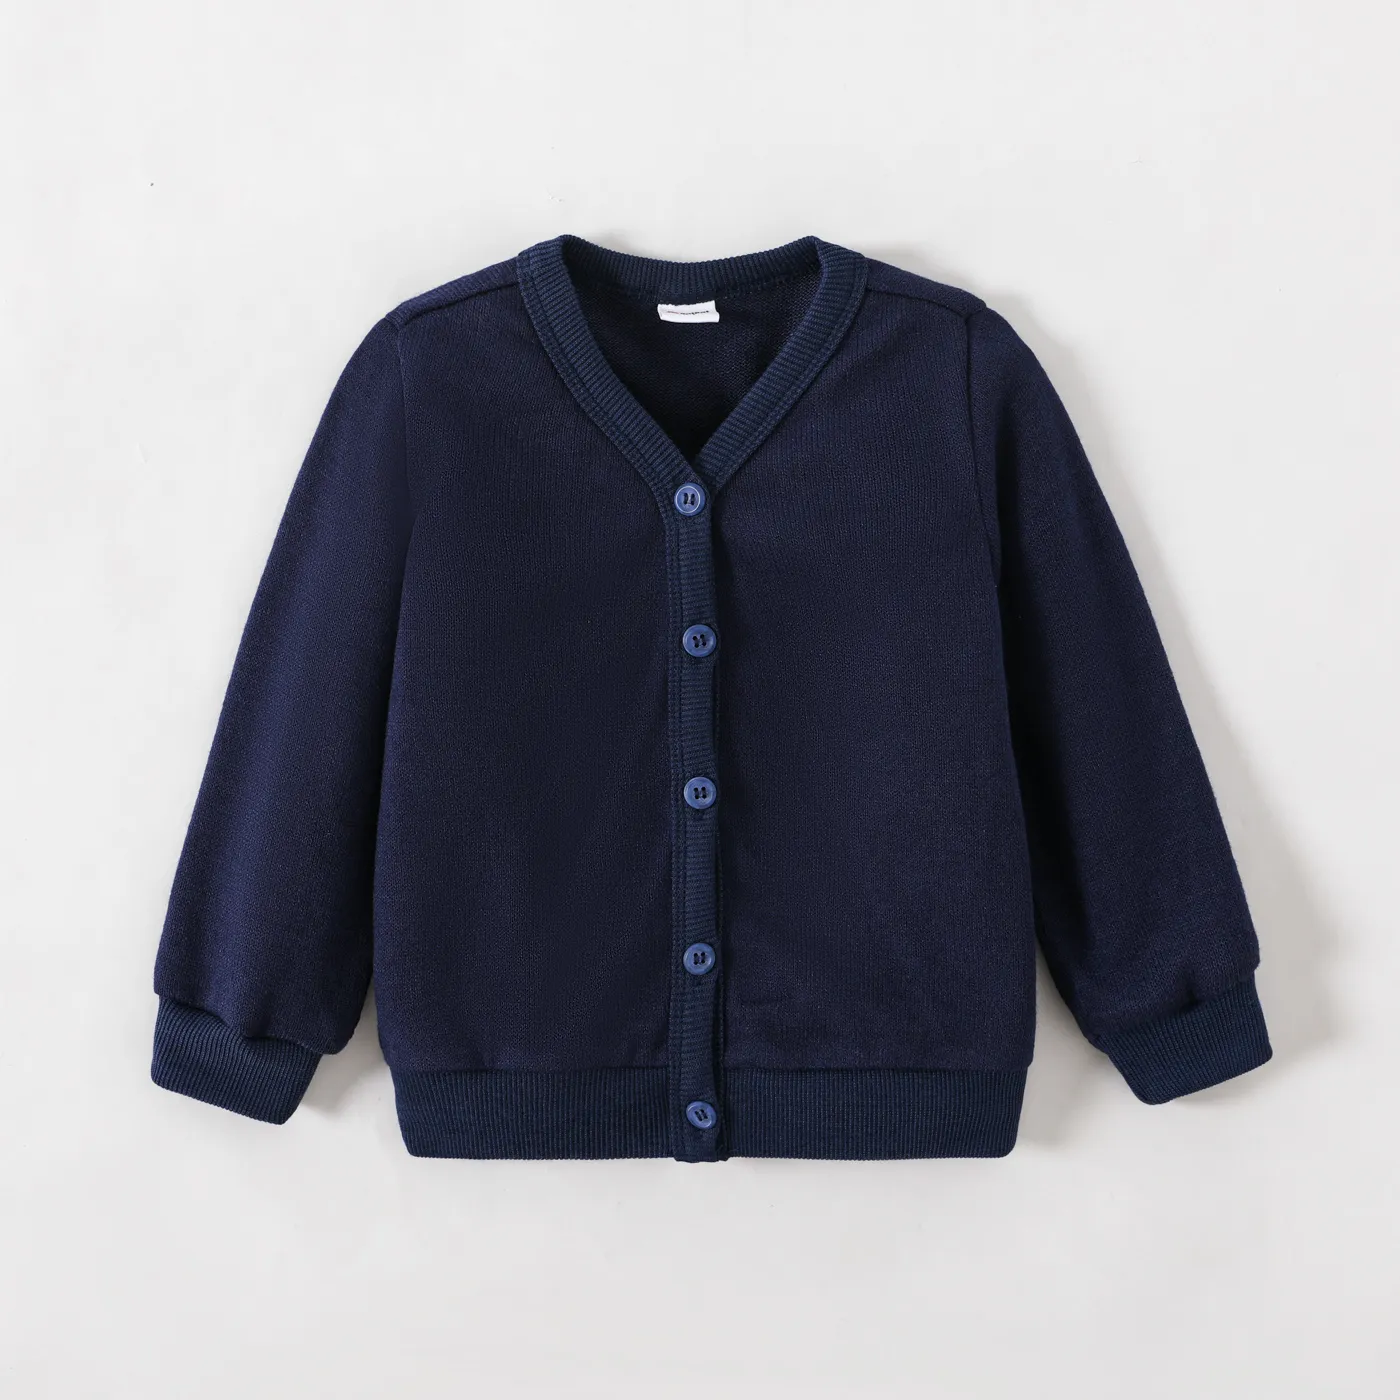 Toddler Boy School Uniform Solid Button Up Jacket